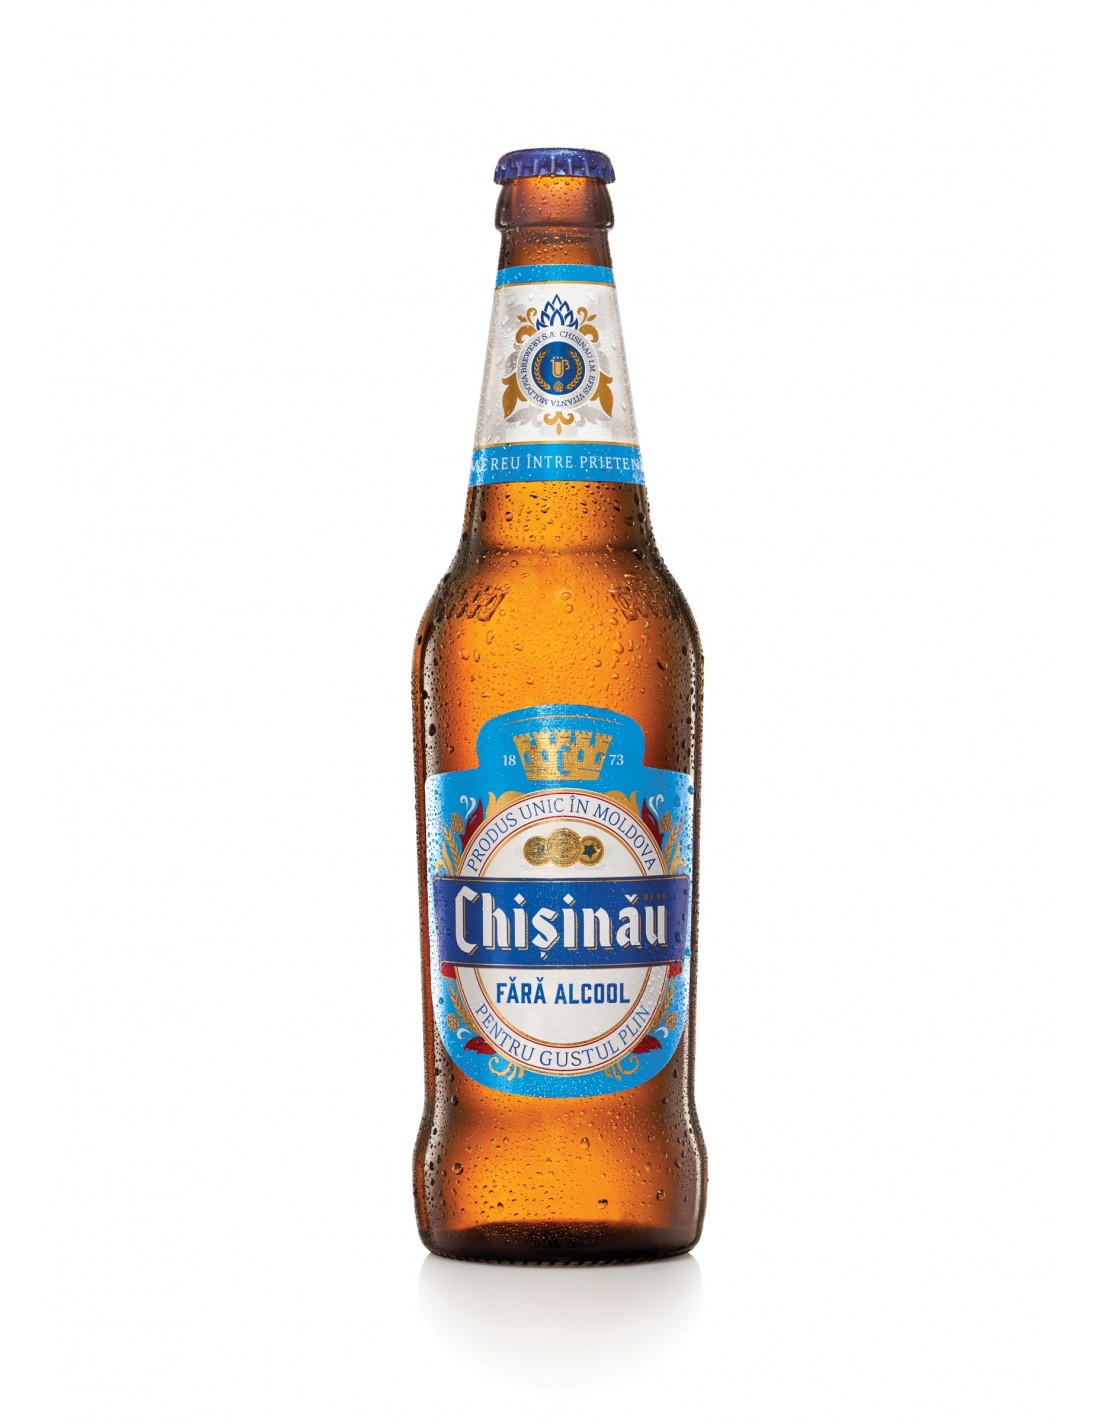 Bere blonda fara alcool Chisinau, 0.5% alc., 0.5L, Republica Moldova alcooldiscount.ro